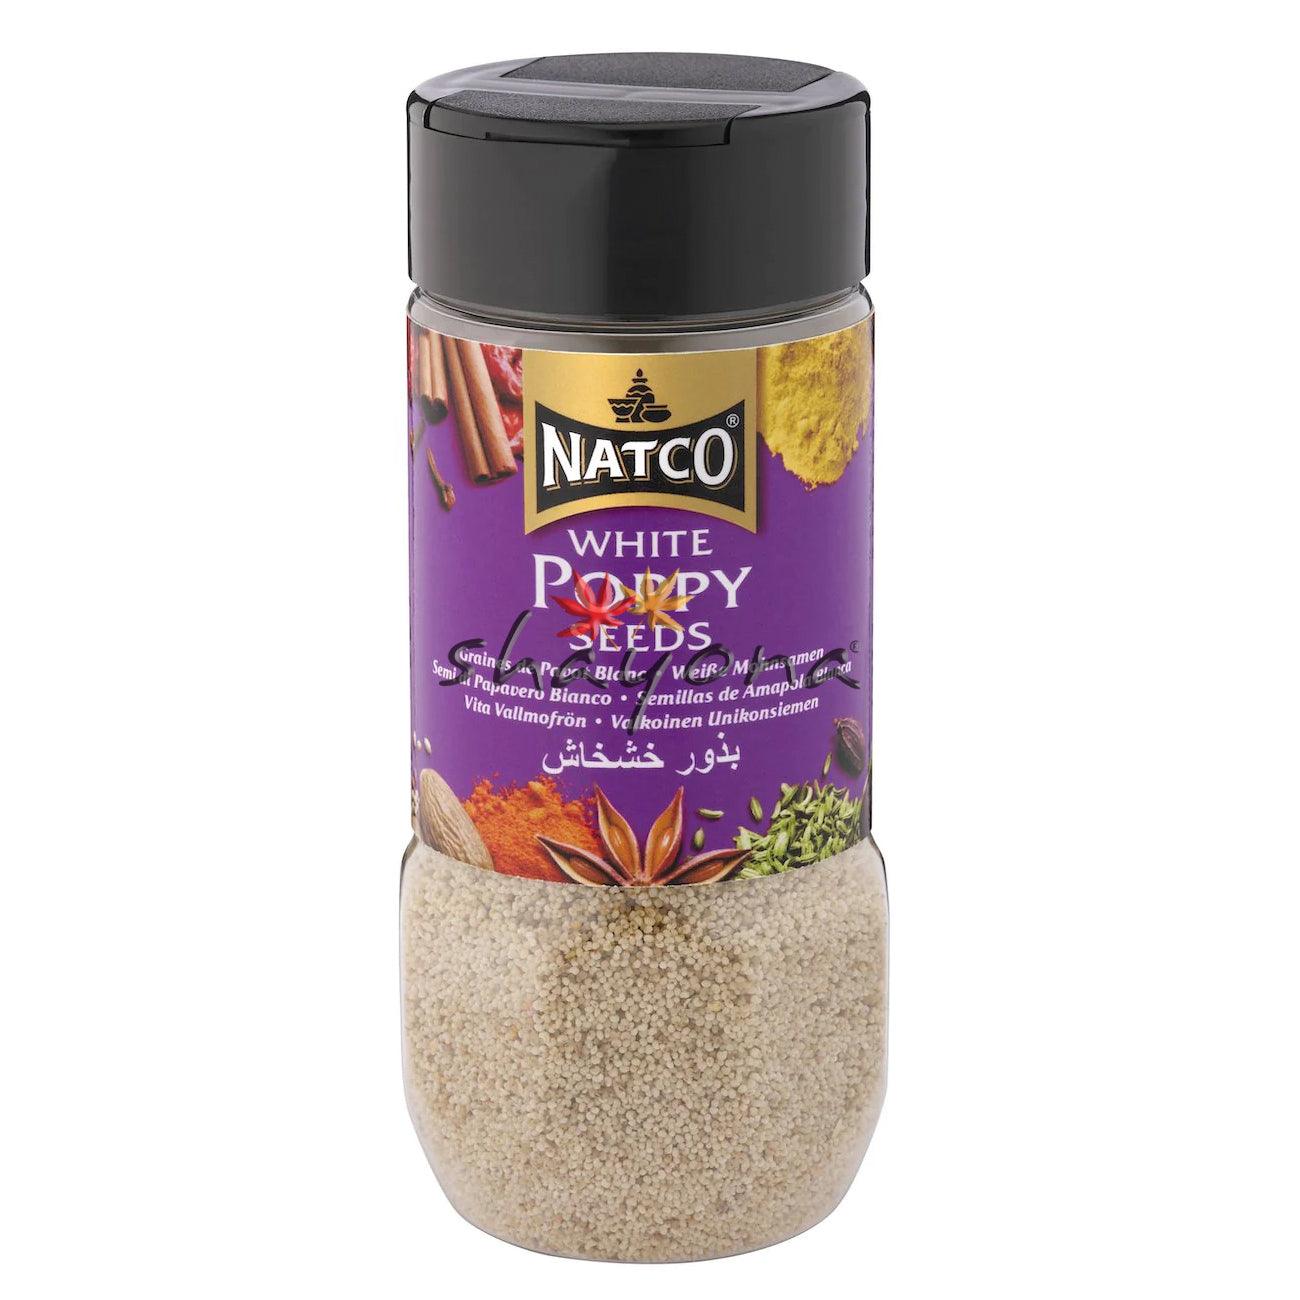 Natco White Poppy Seeds - Shayona UK